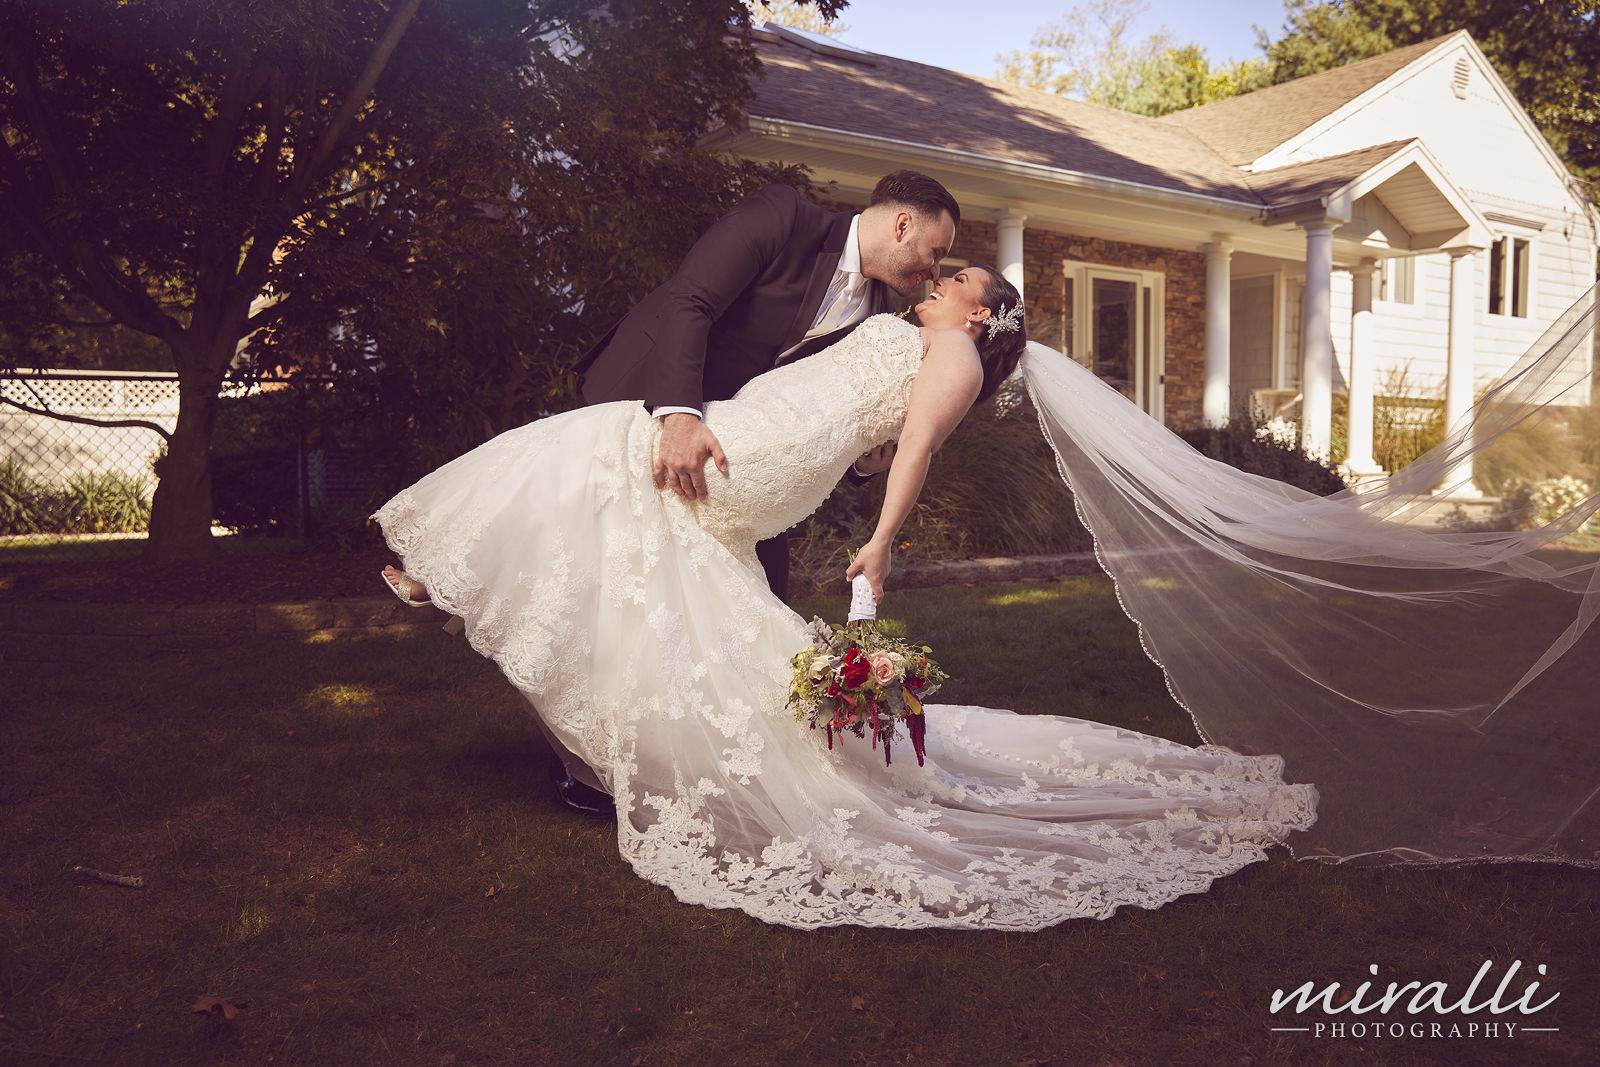 Backyard Wedding Photos by Miralli Photography